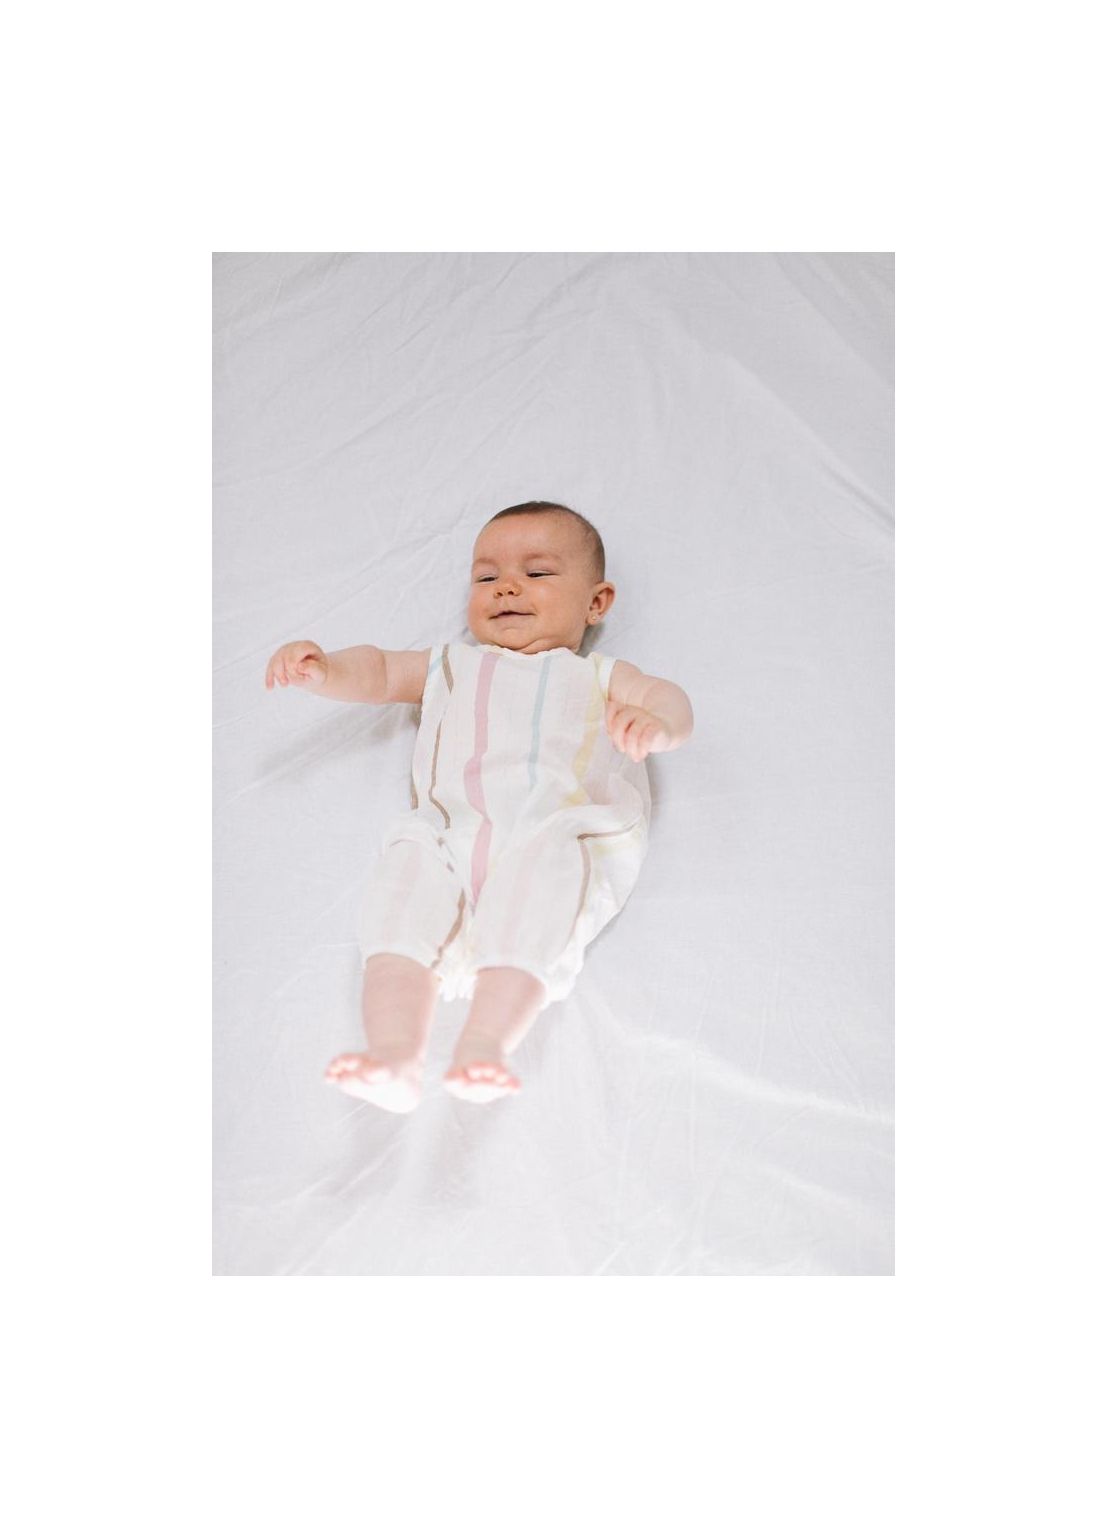 Baby ROMPER Unisex-100% Cotton- Woven